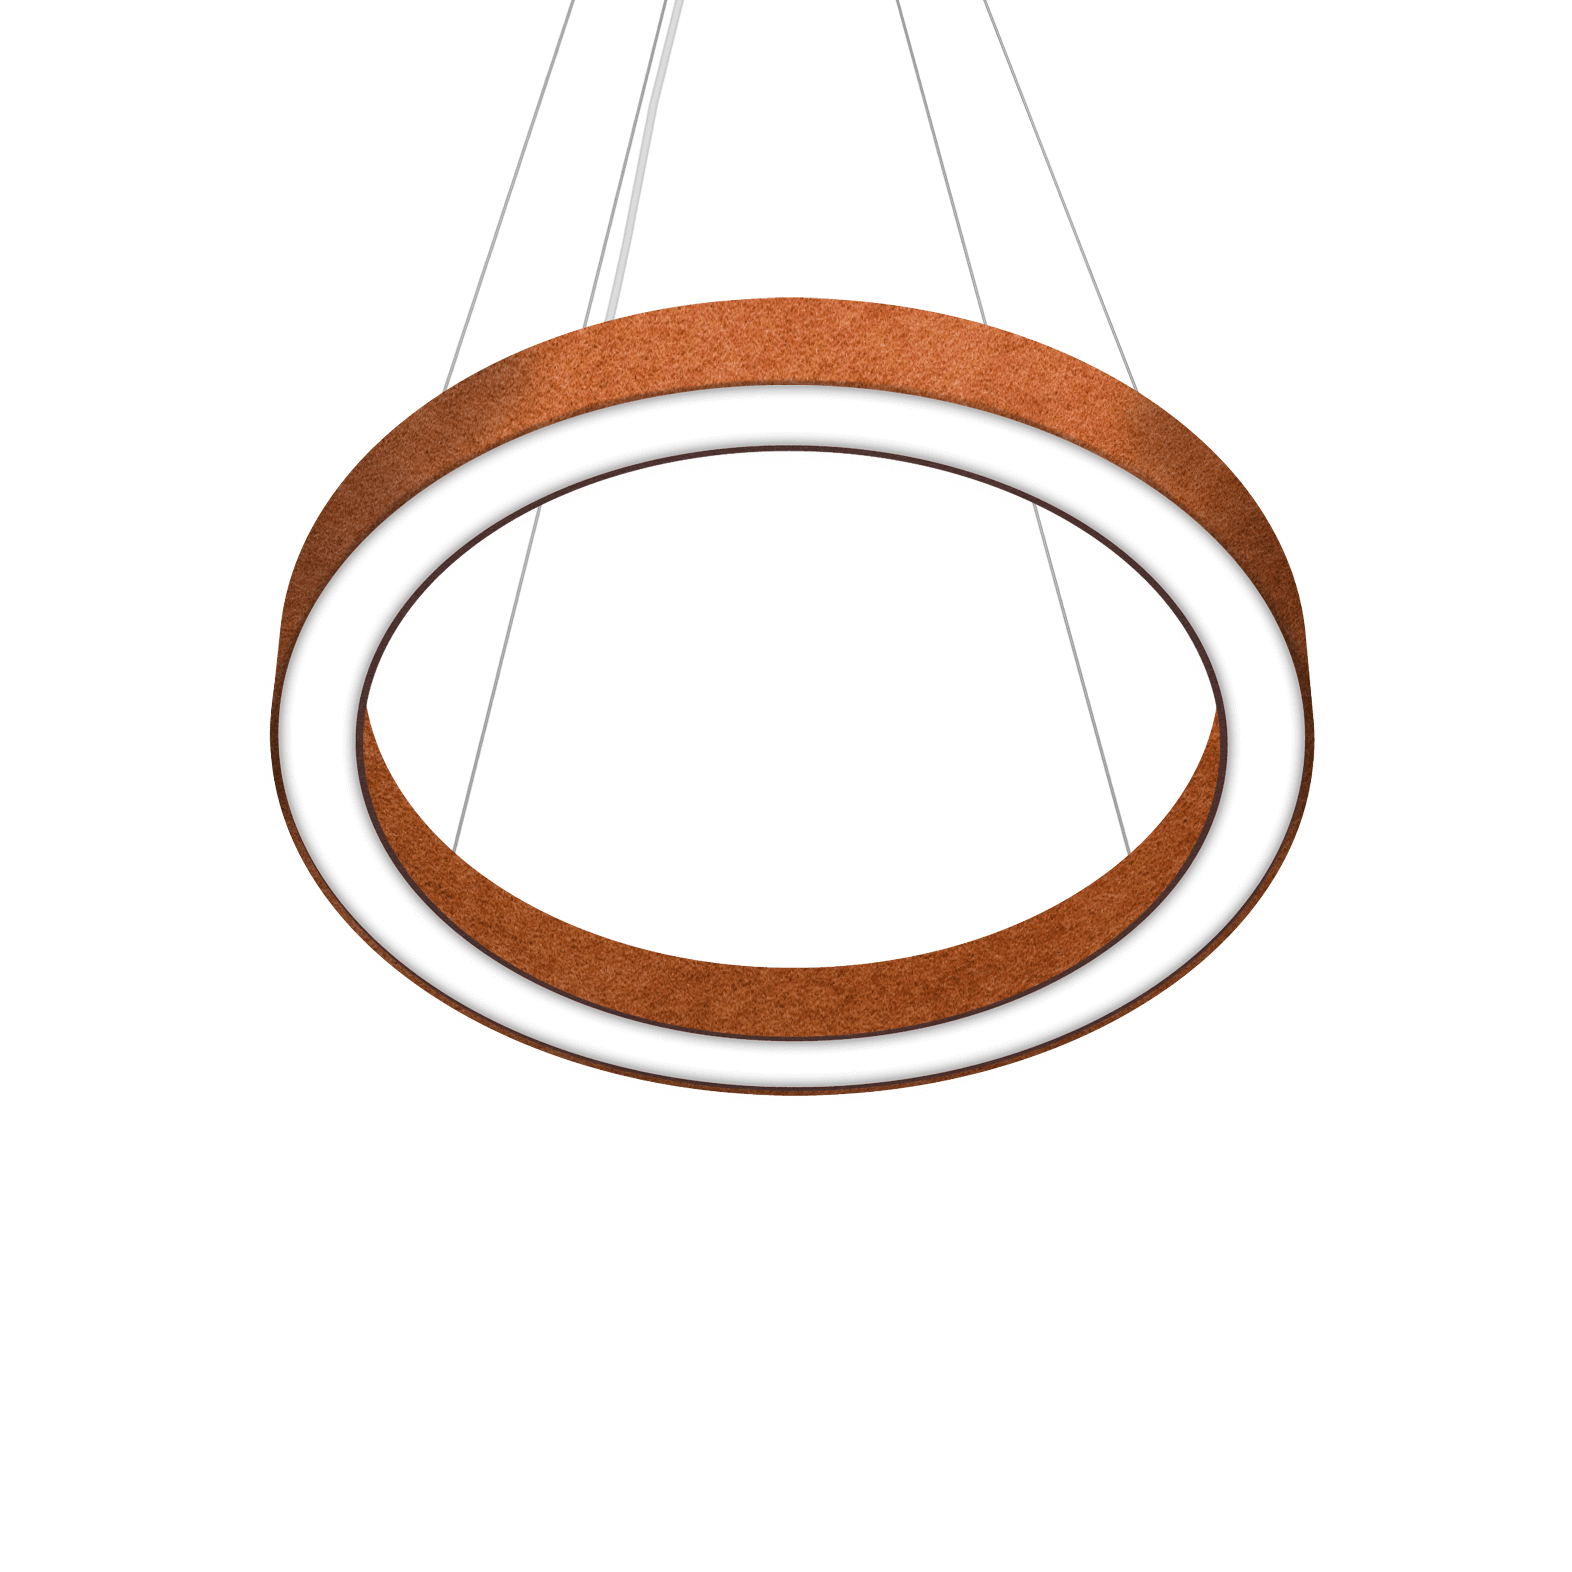 pendant ring shaped light fixture with orange felt texture